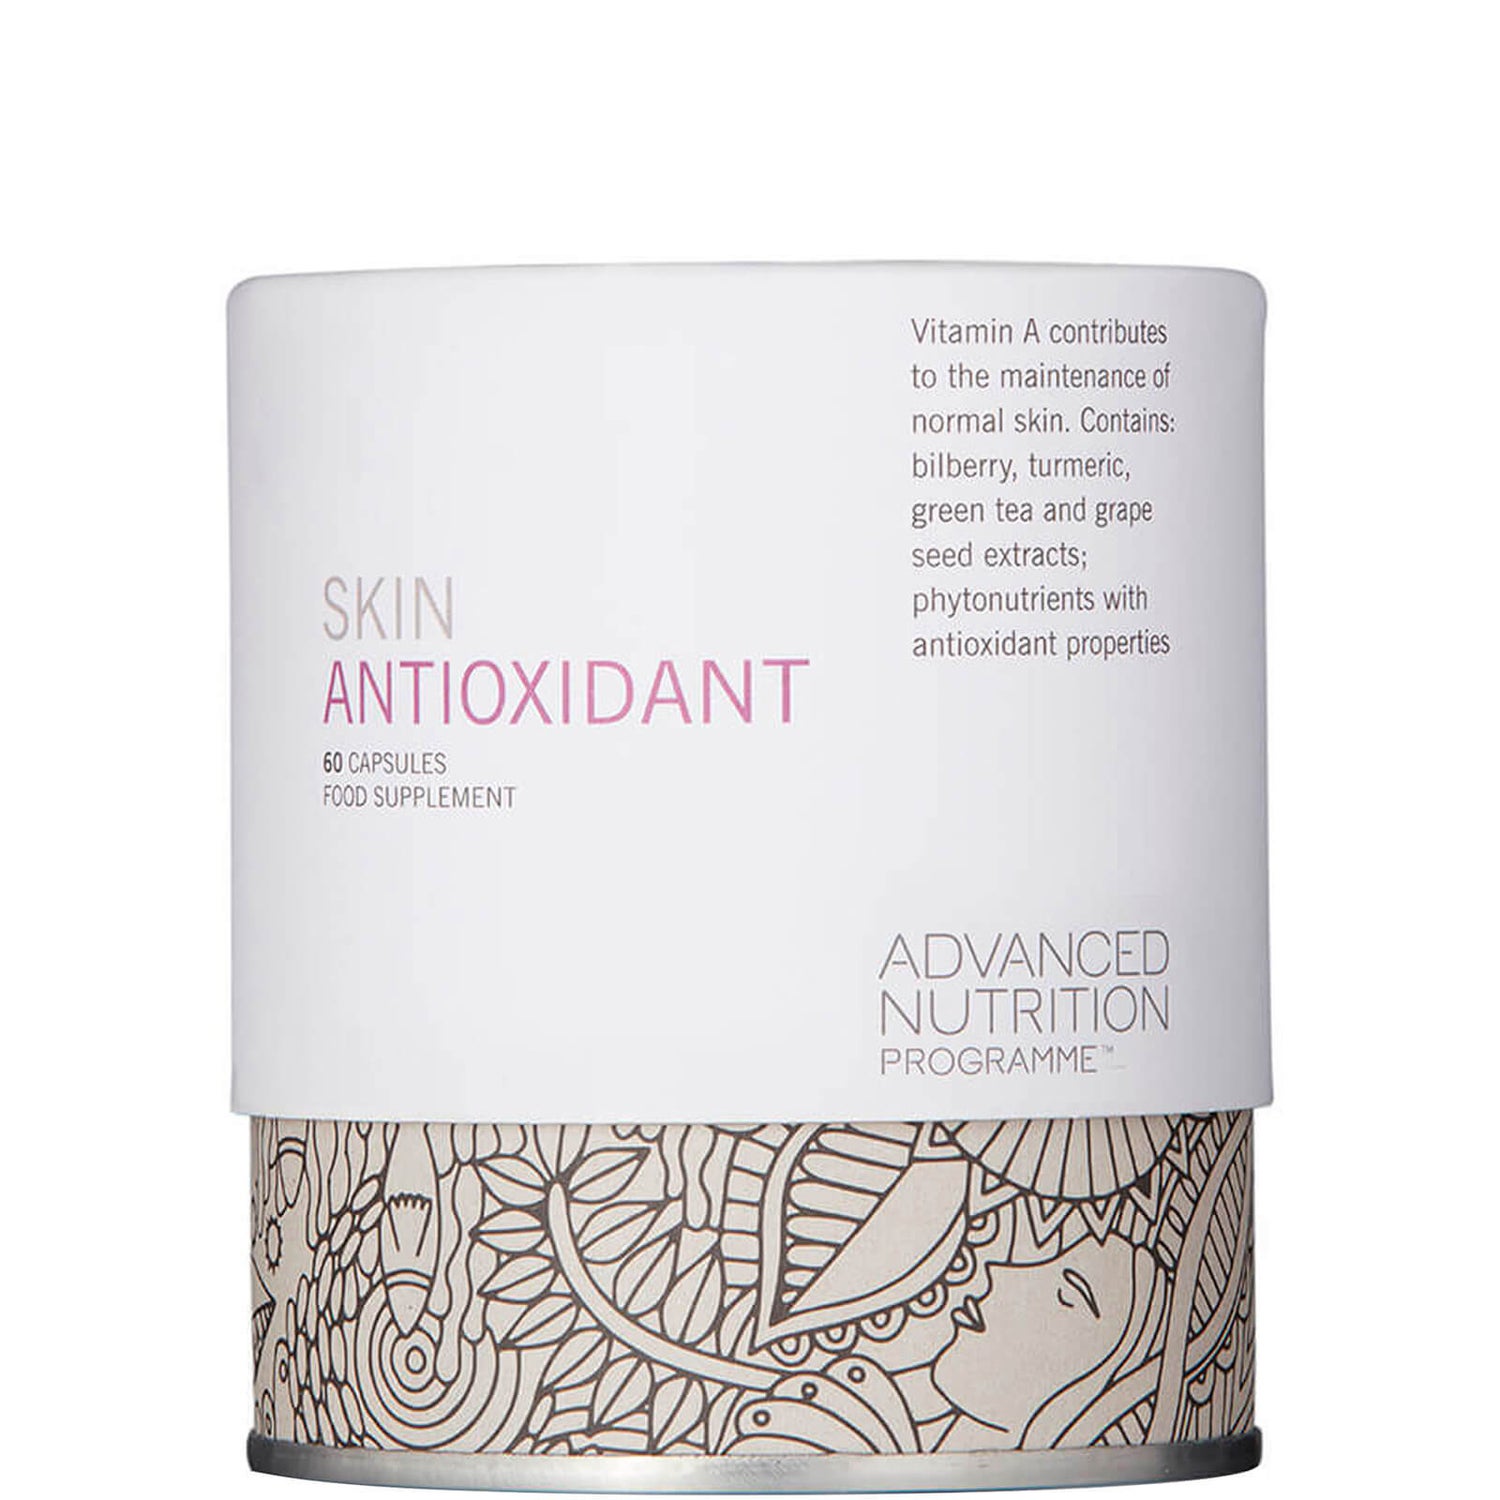 Advanced Nutrition Programme™ Skin Antioxidant Capsules